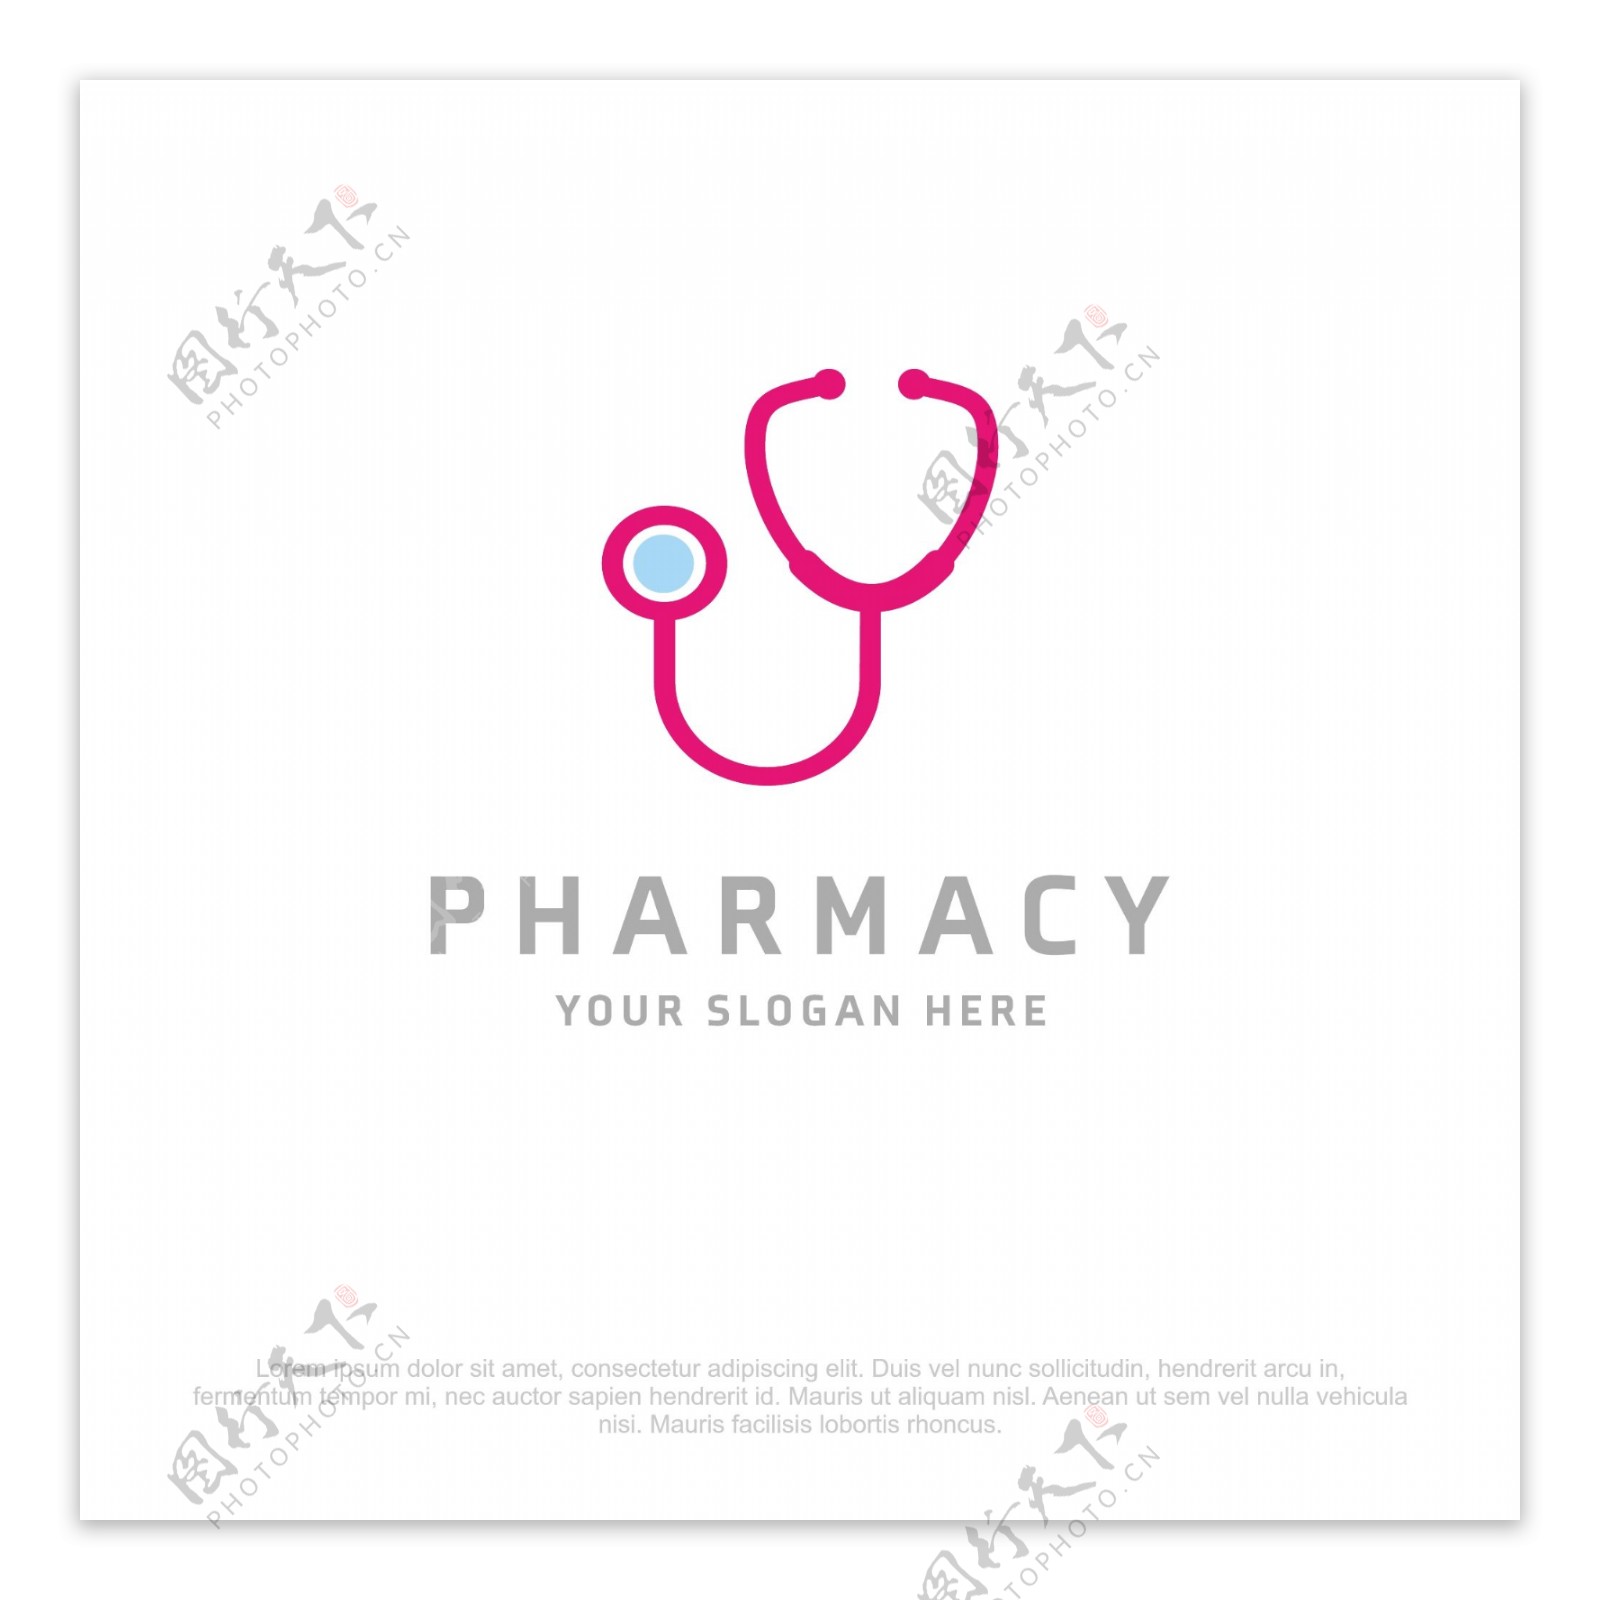 蓝色和粉红色医疗logo模板